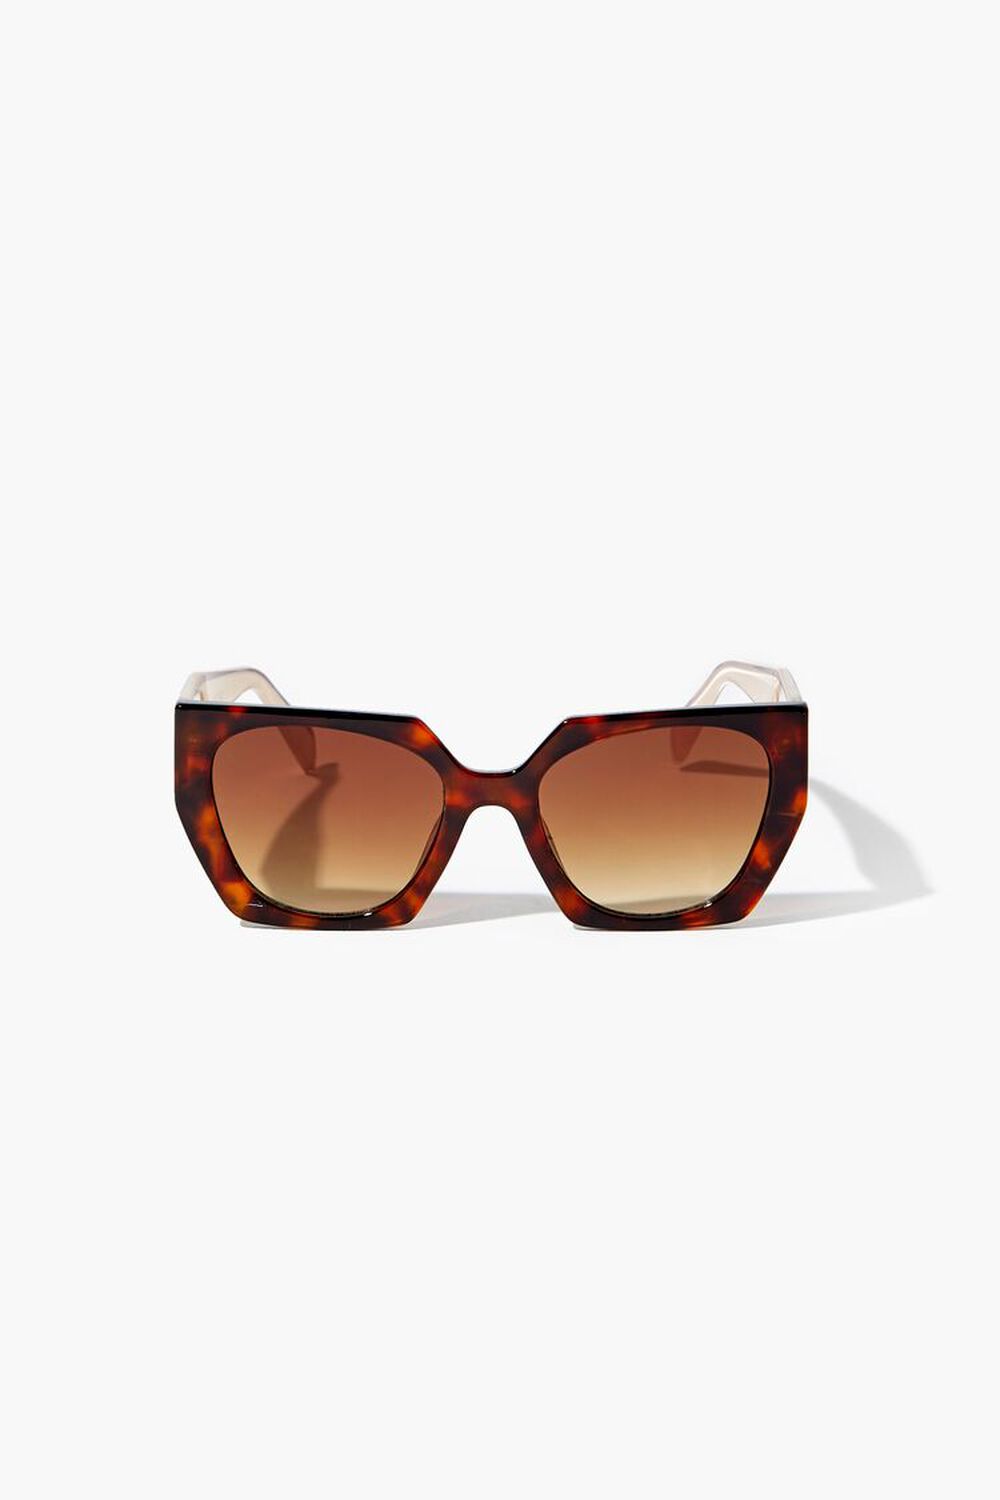 BROWN/BROWN Cat-Eye Frame Sunglasses, image 1